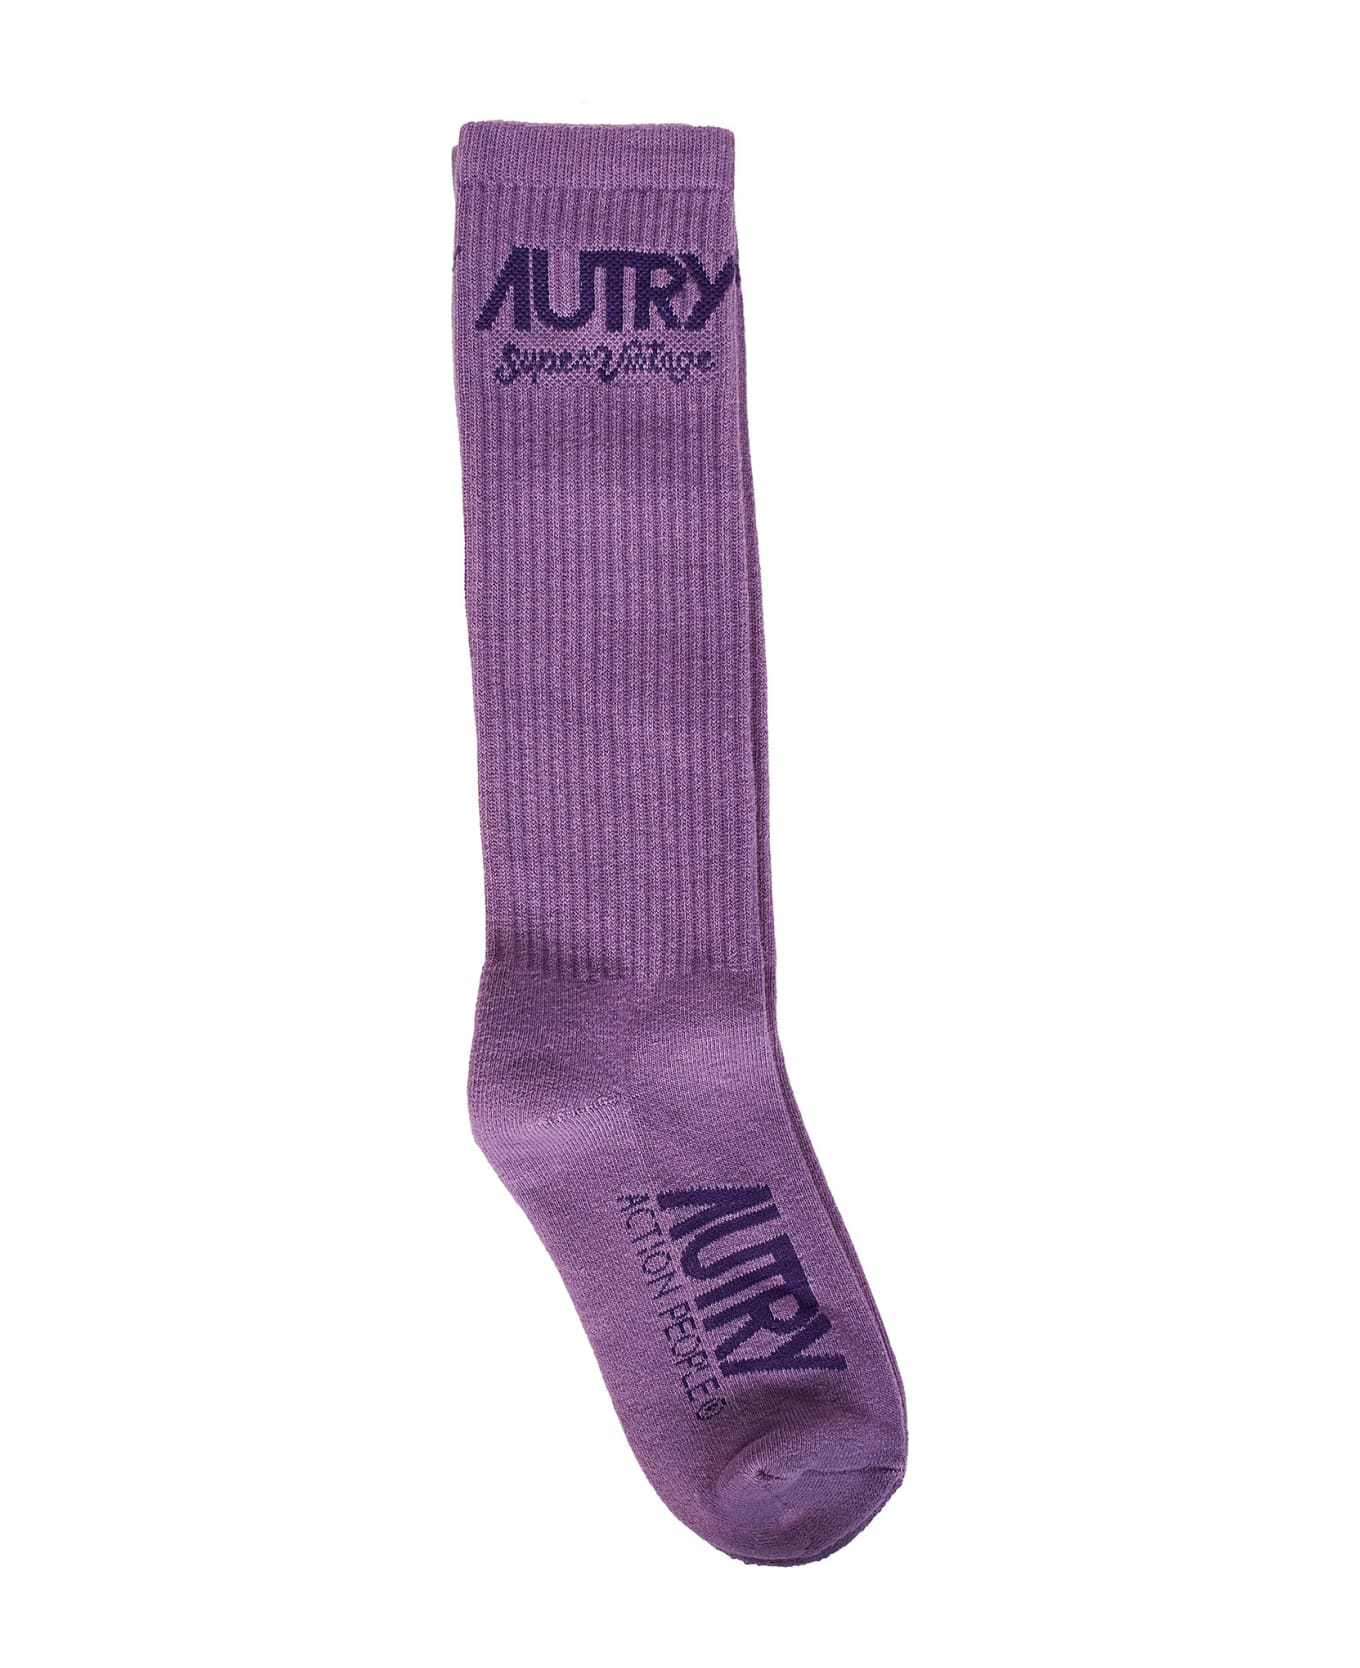 Autry Supervintage Socks - Tinto Lilac